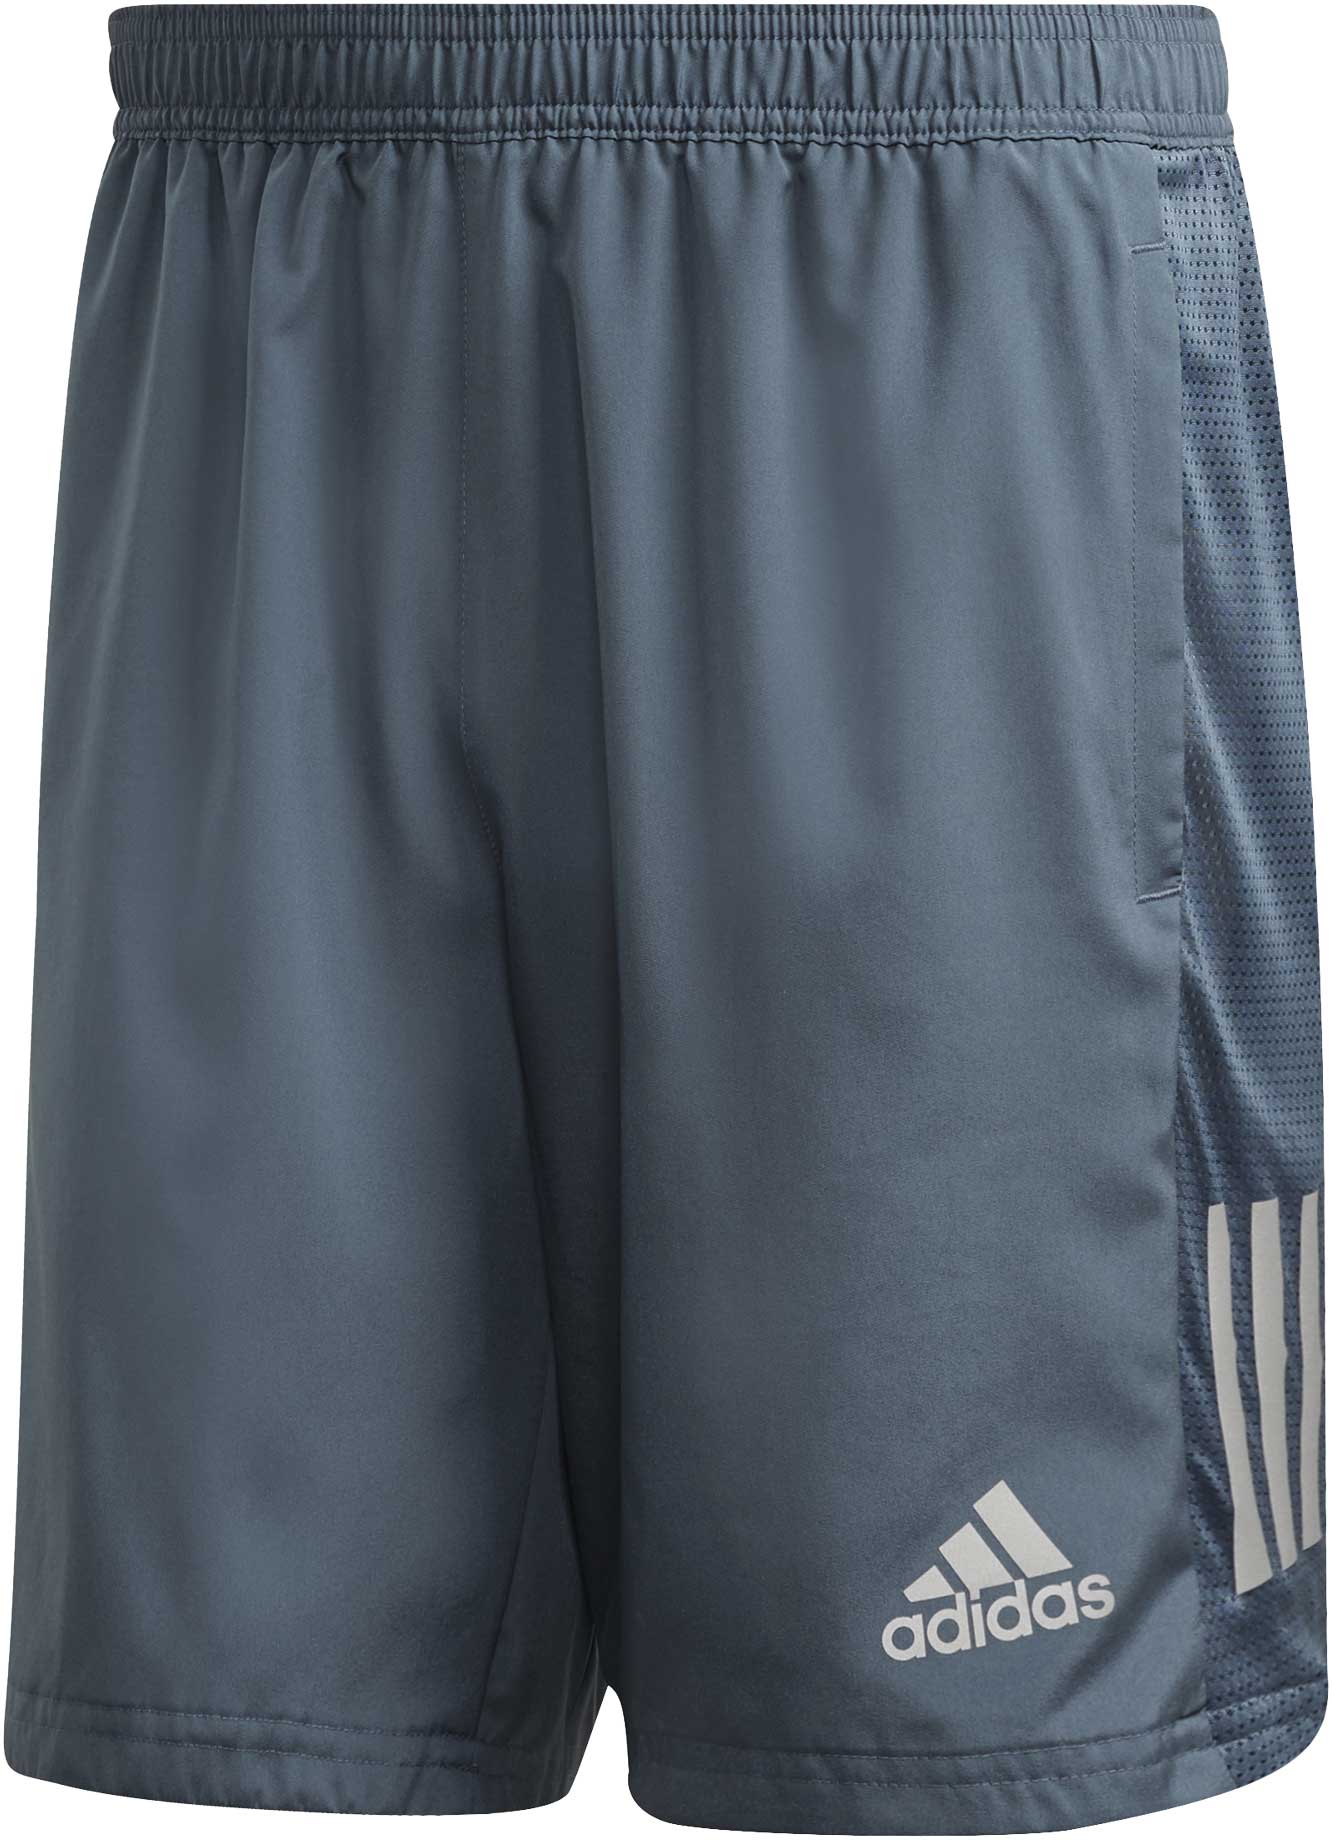 Men's sports shorts